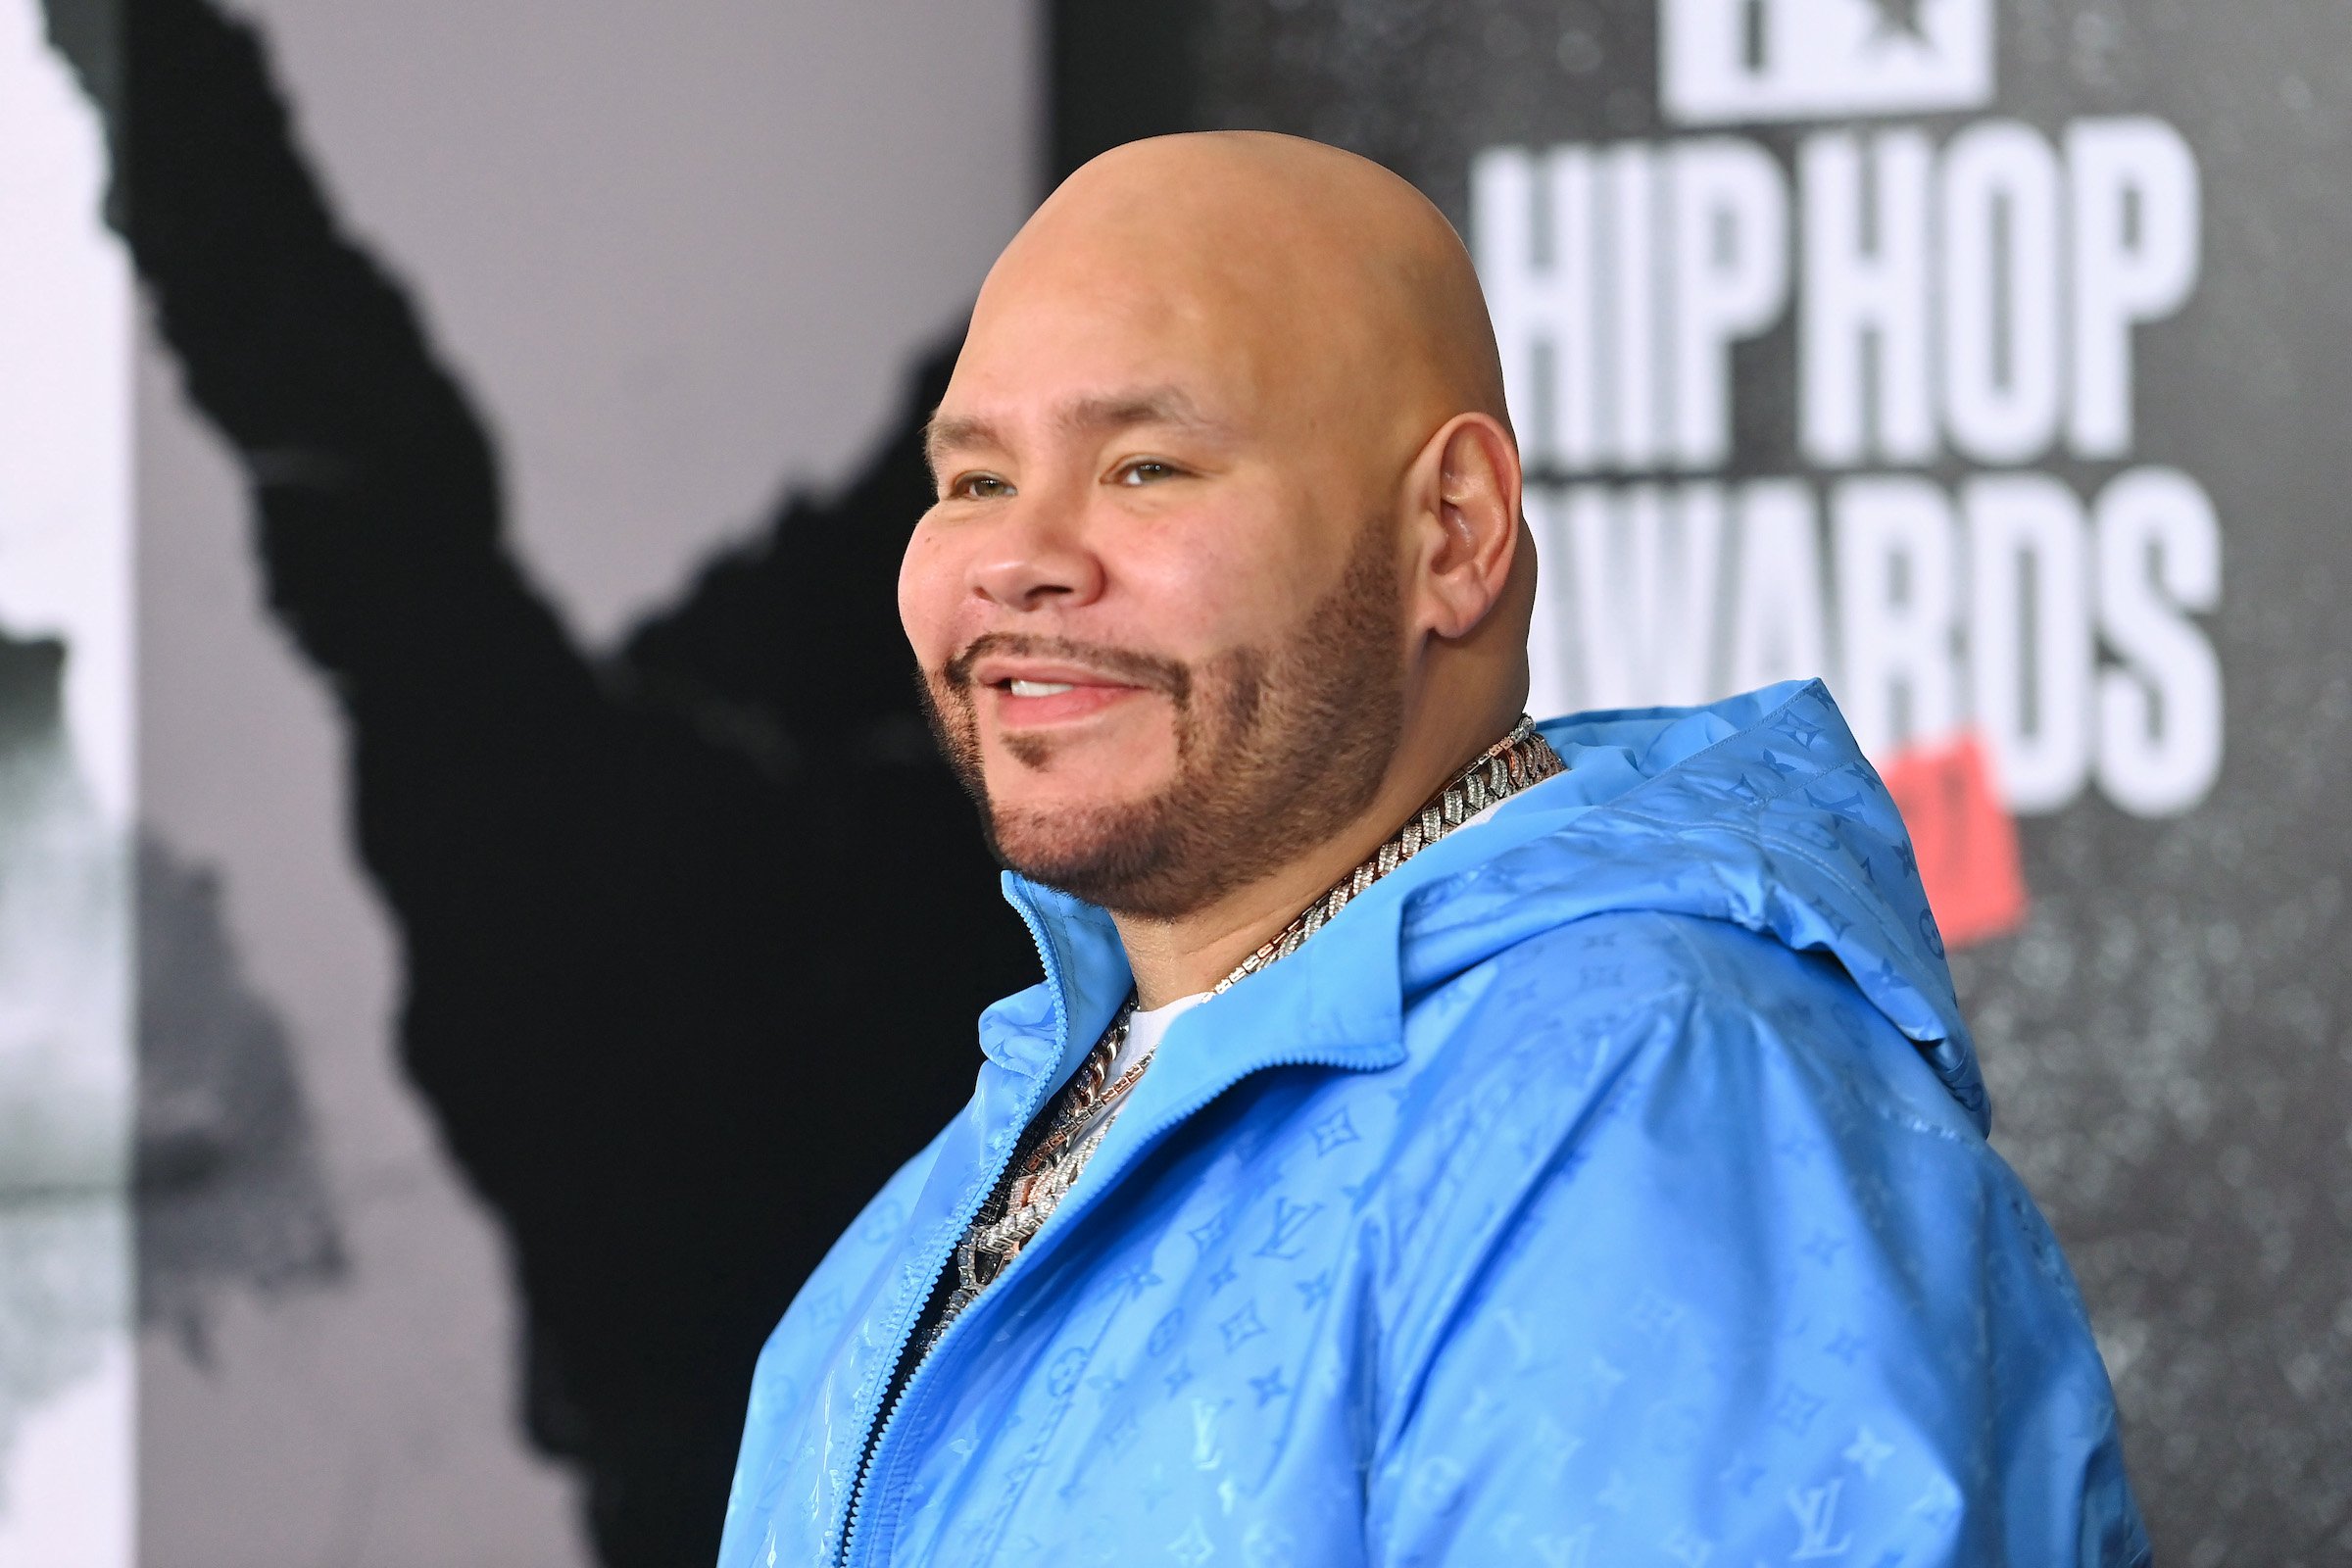 Fat Joe, who is getting a new TV show on Starz, wearing a blue jacket